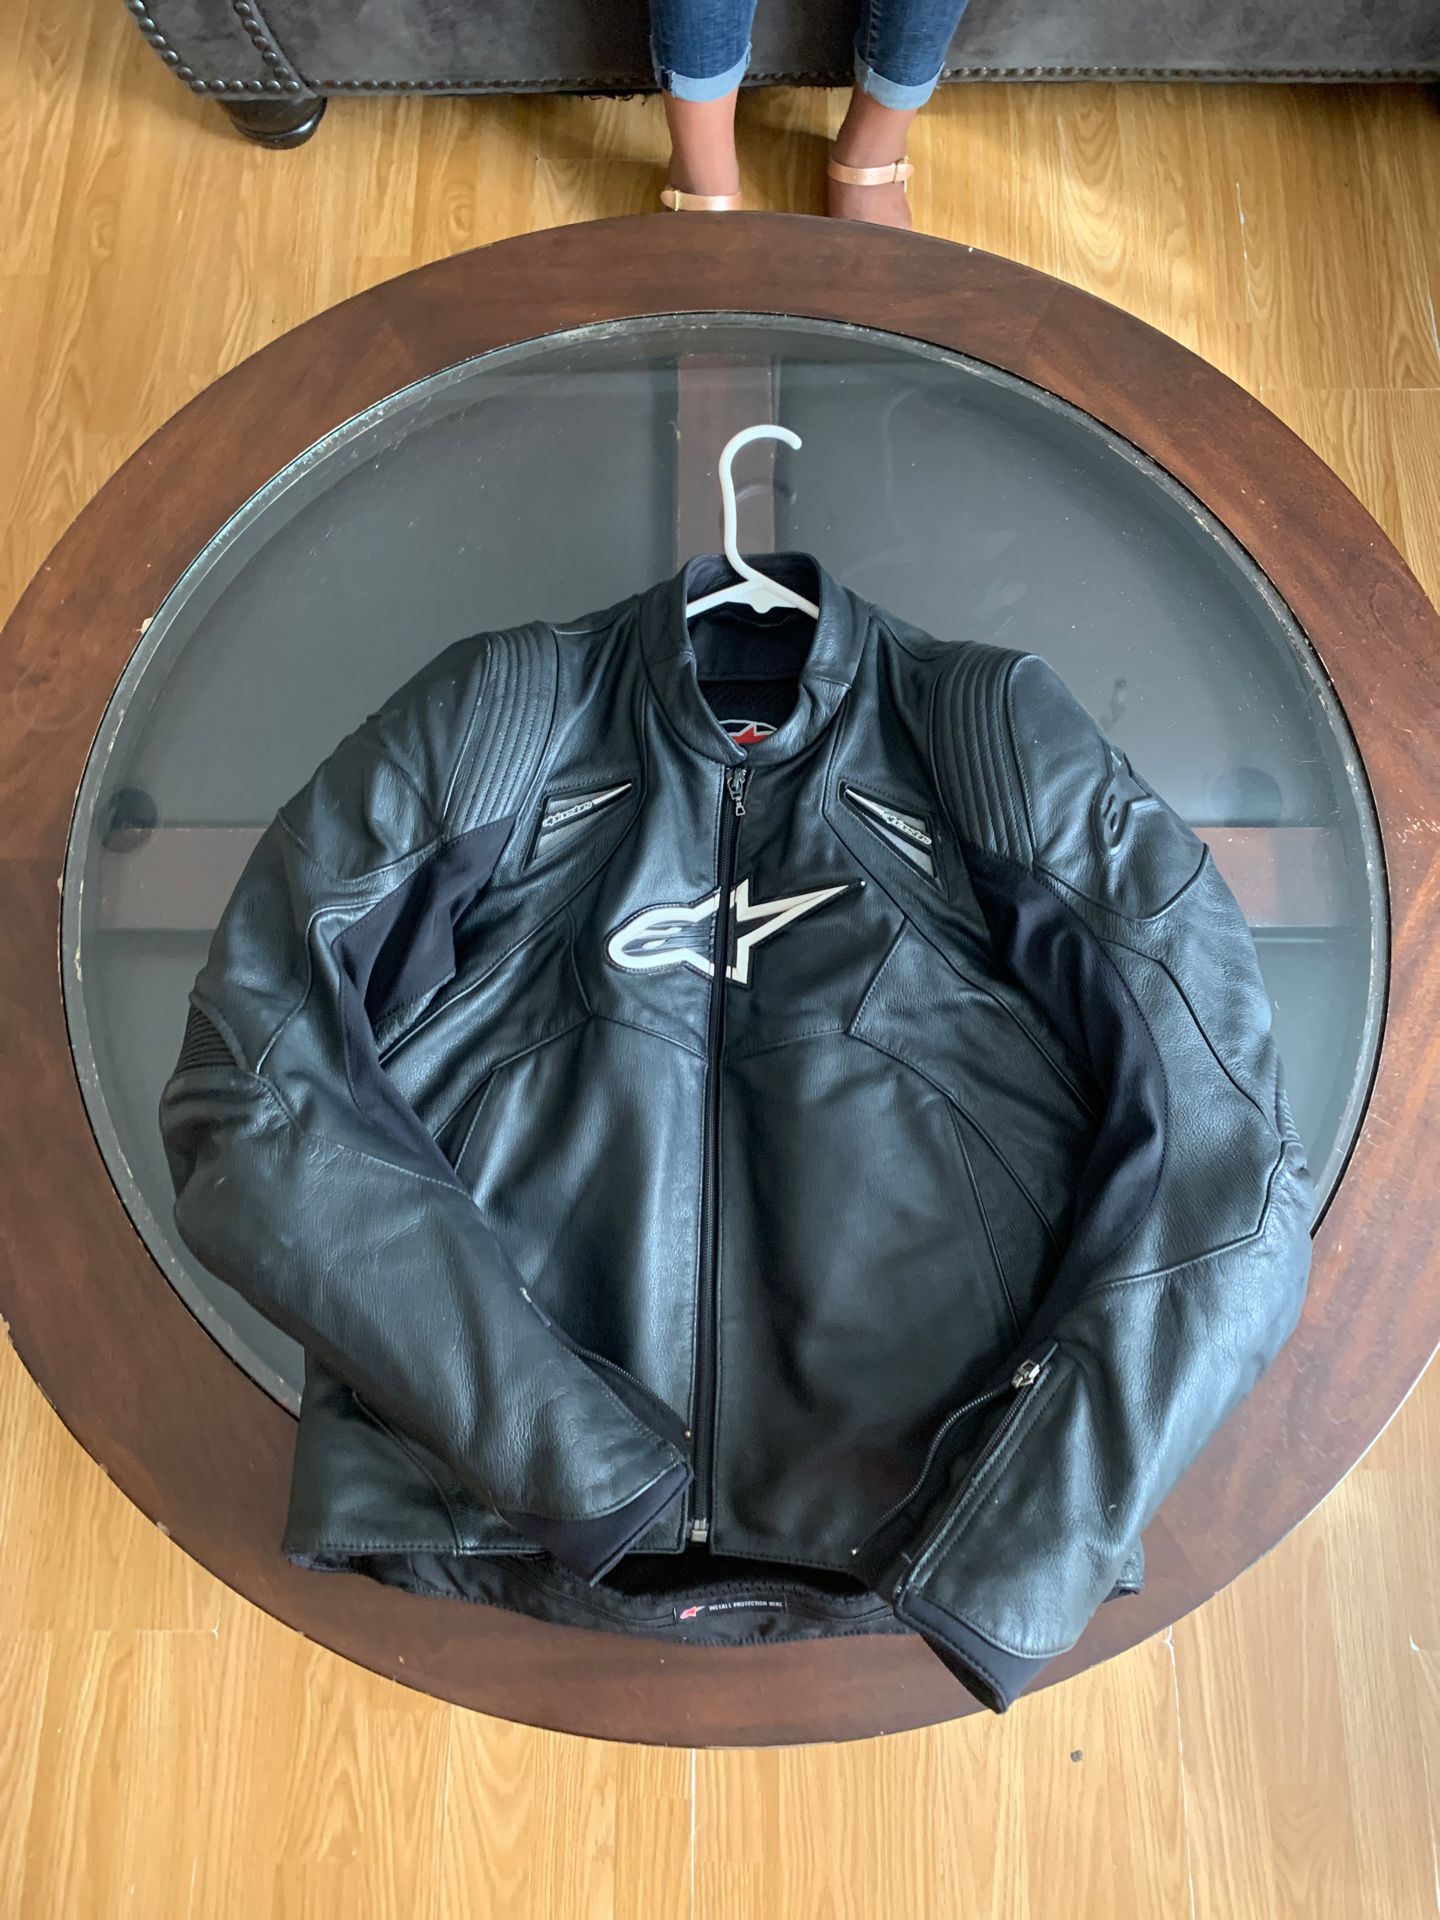 Alpine star Motorcycle jacket